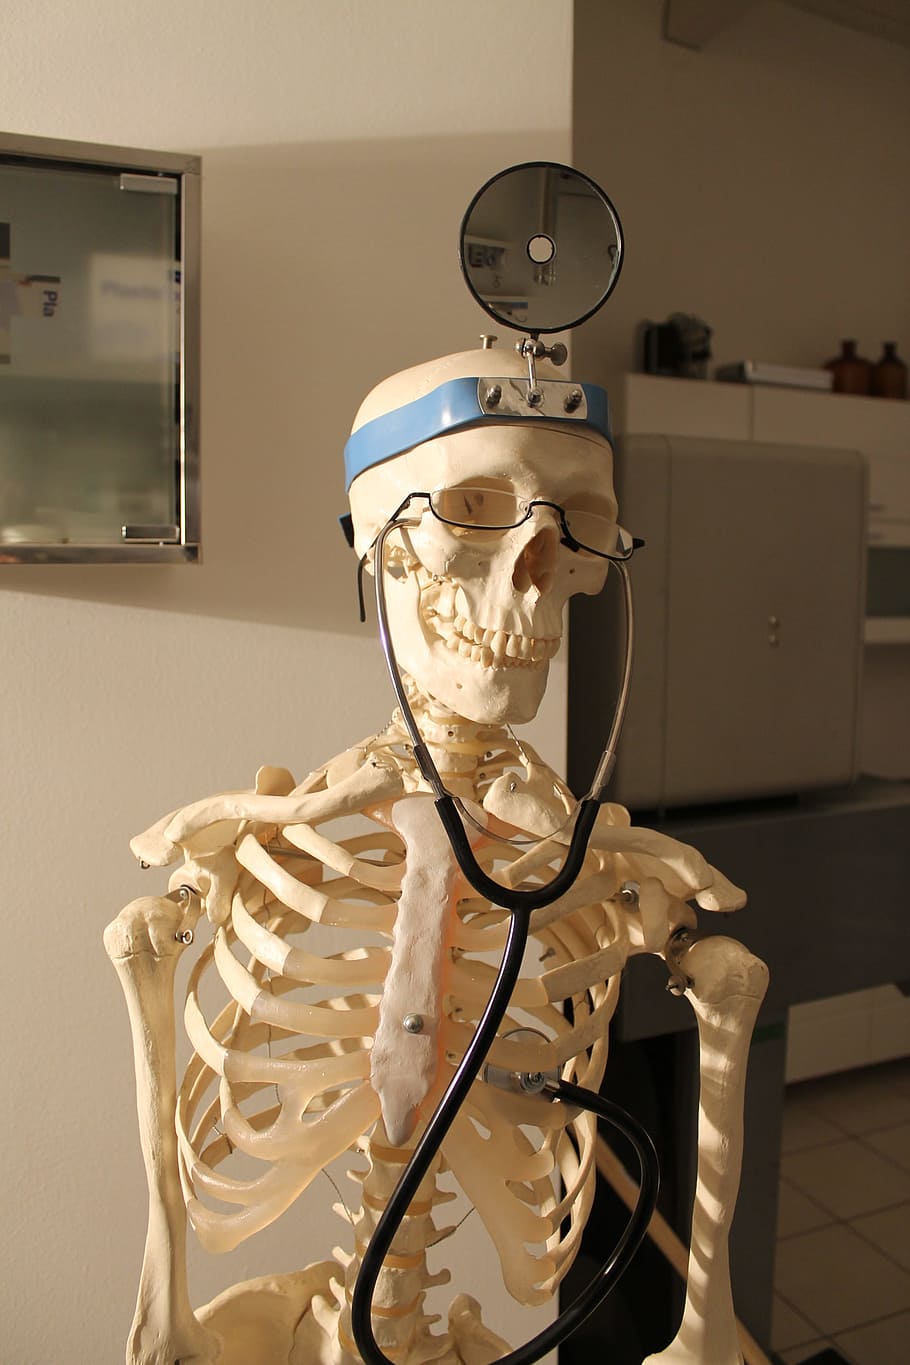 HD wallpaper: skeleton, doctor, fun, anatomy, bone, science, healthcare and medicine